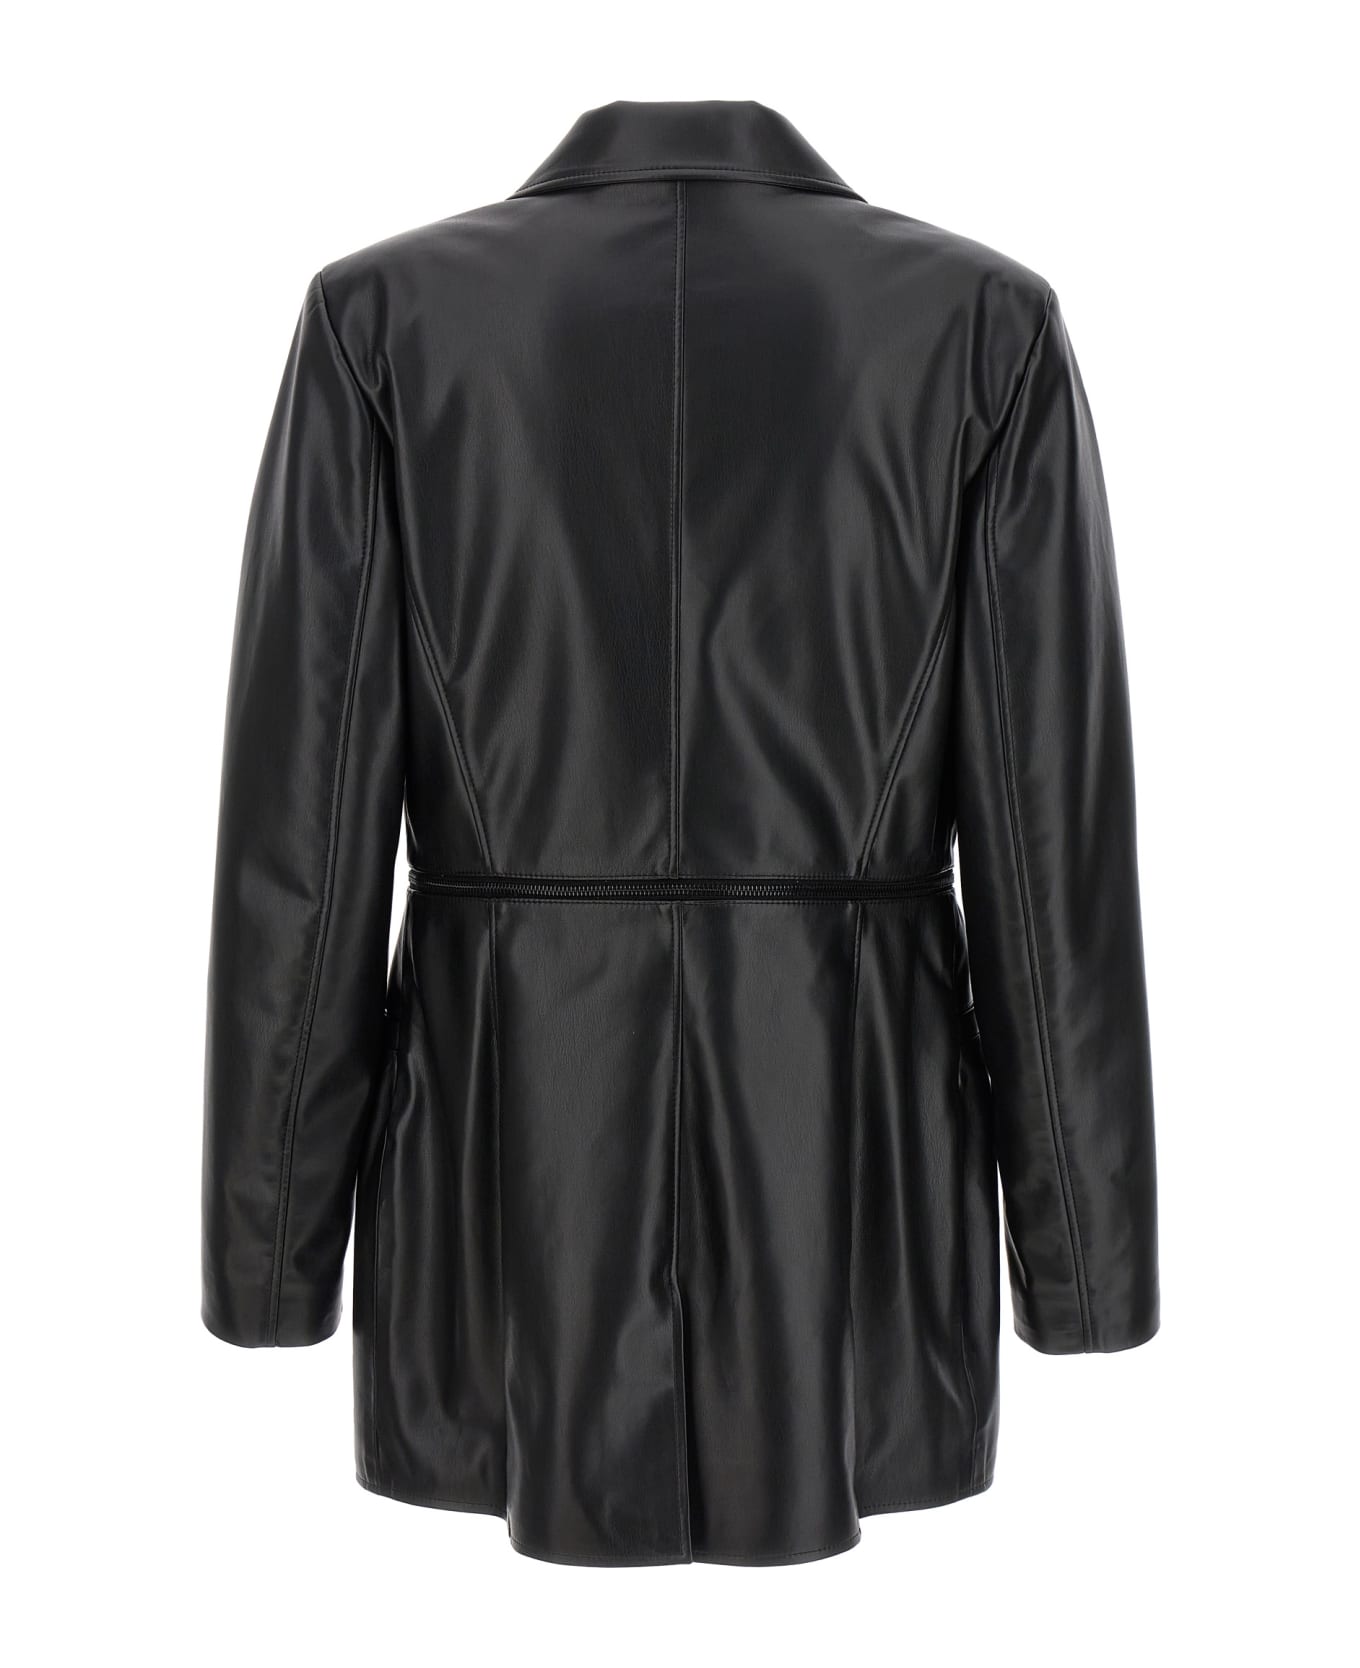 Karl Lagerfeld Recycled Leather Blazer - Black   コート